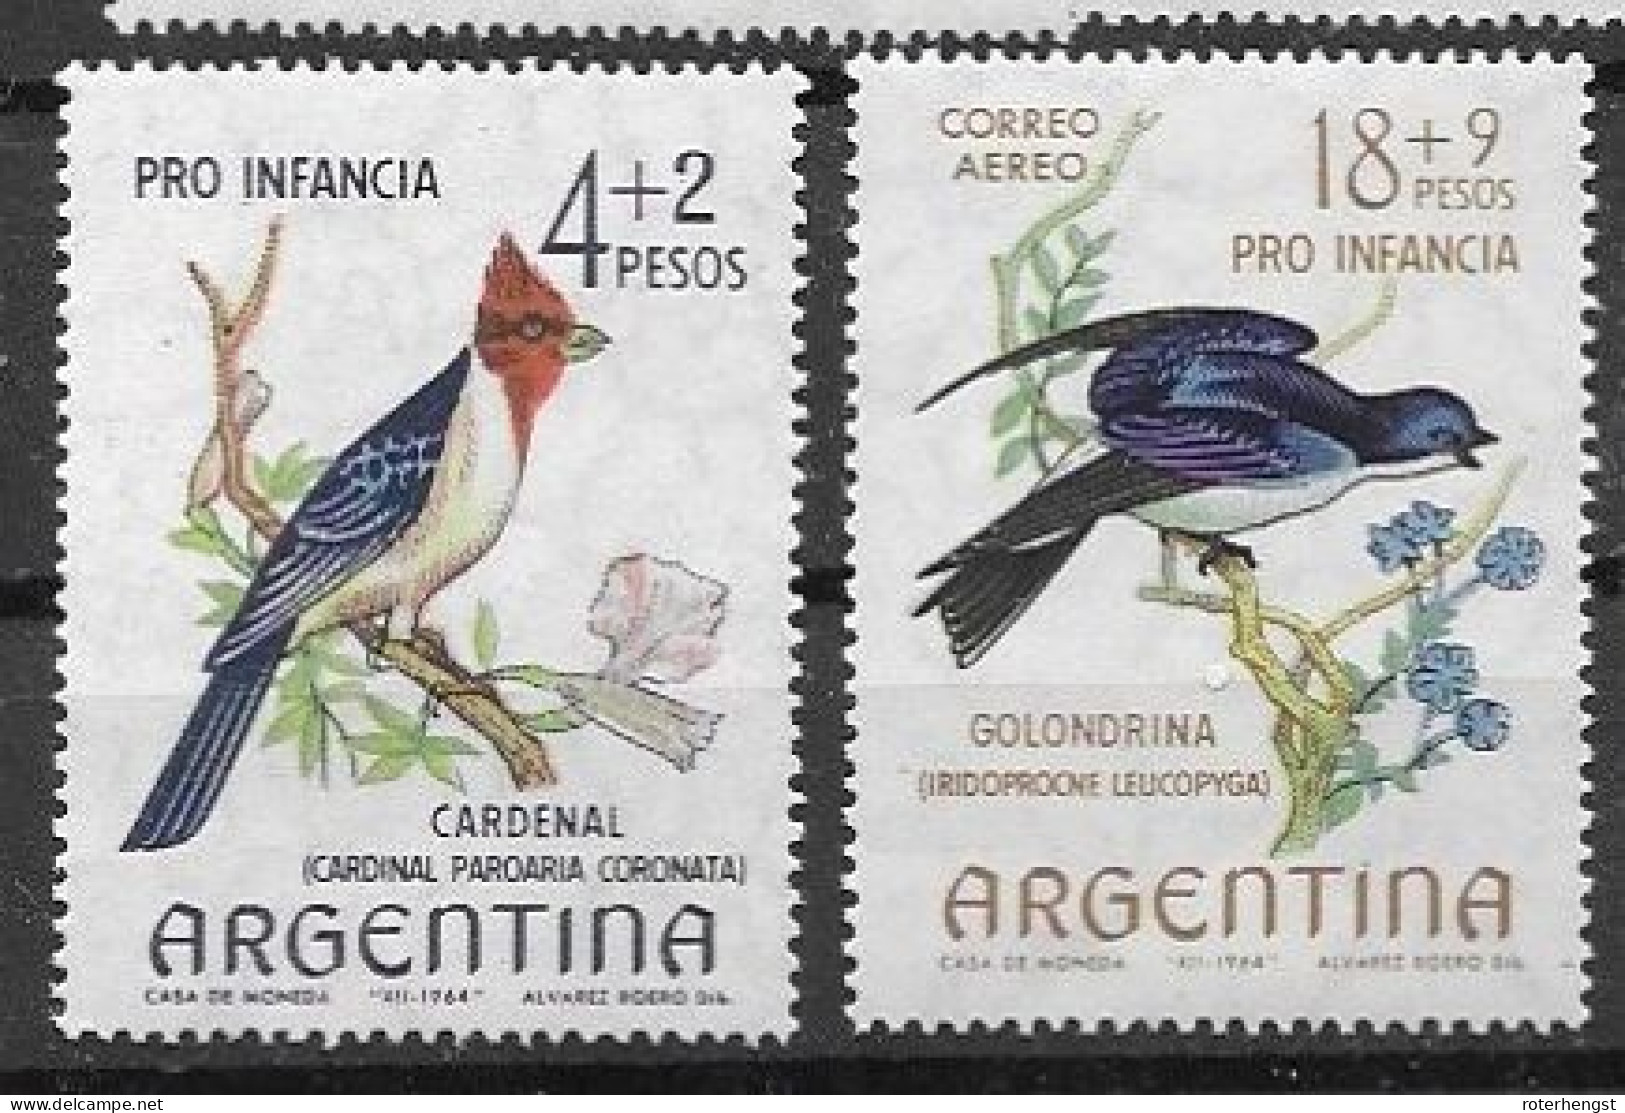 Argentina Mnh ** Birds Set 1964 4 Euros - Nuovi